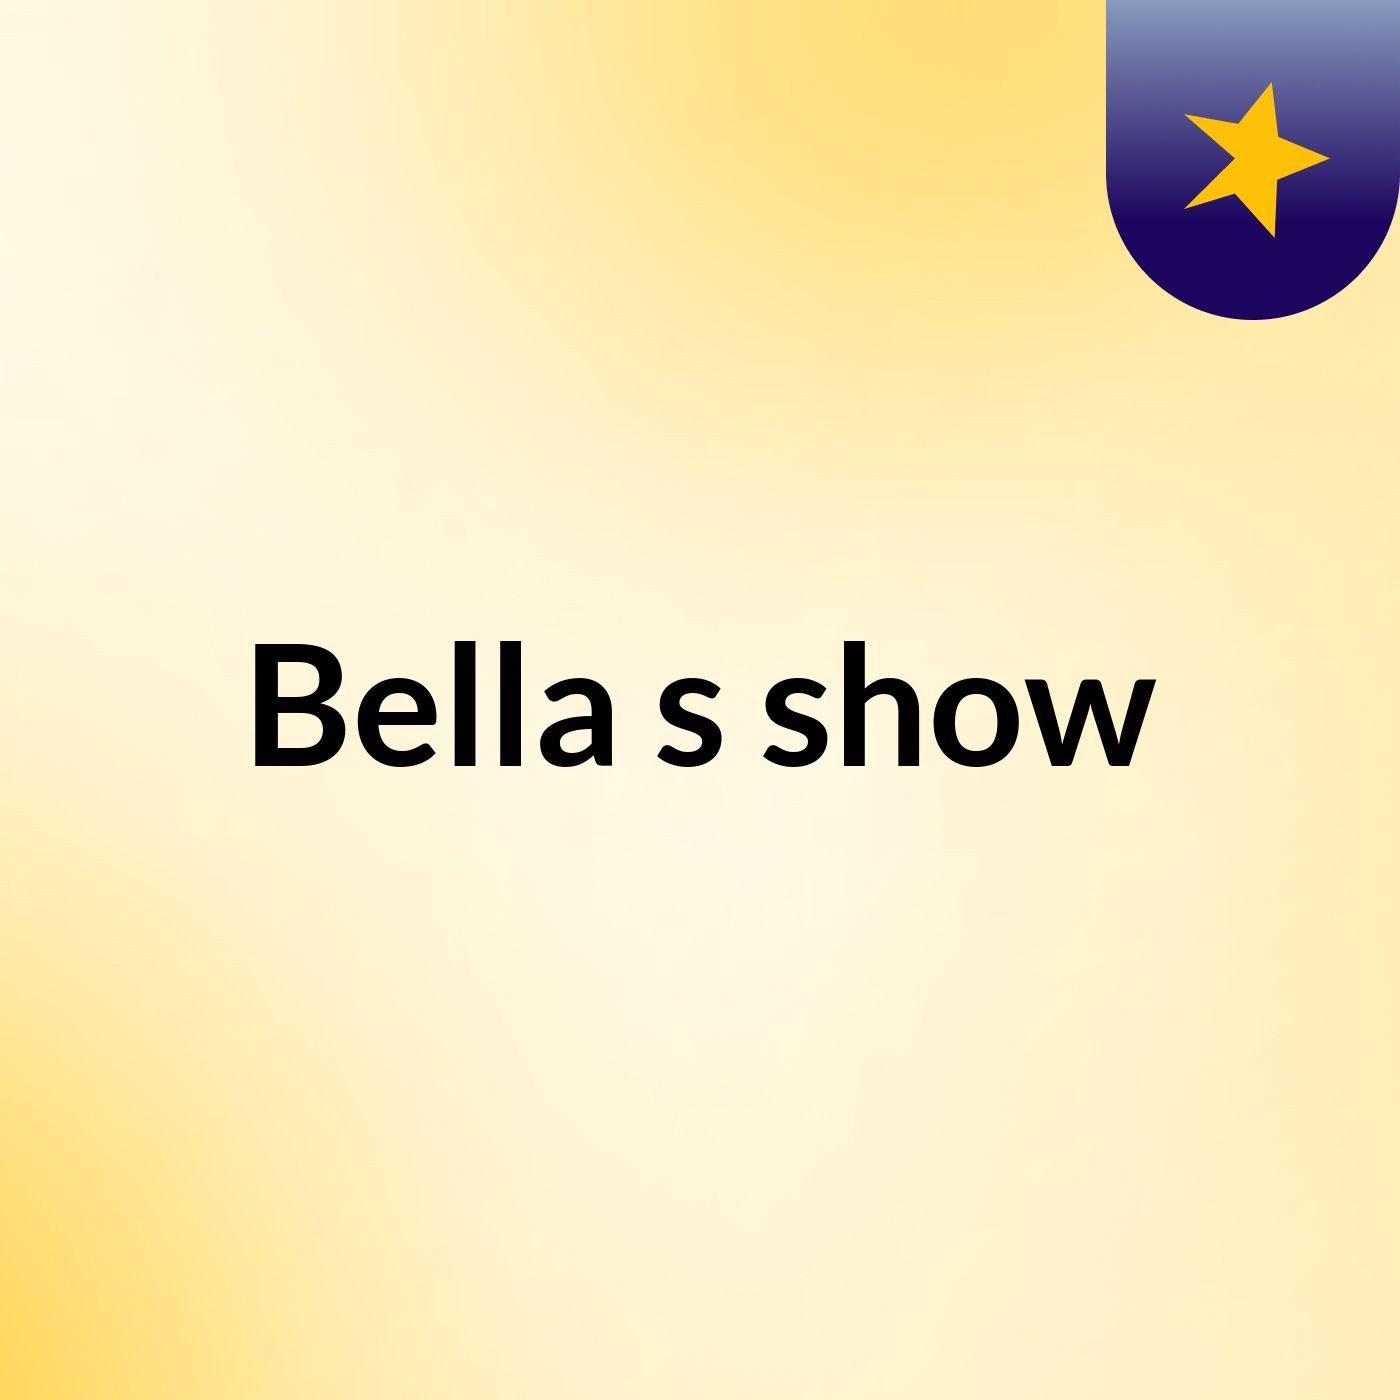 Bella's show